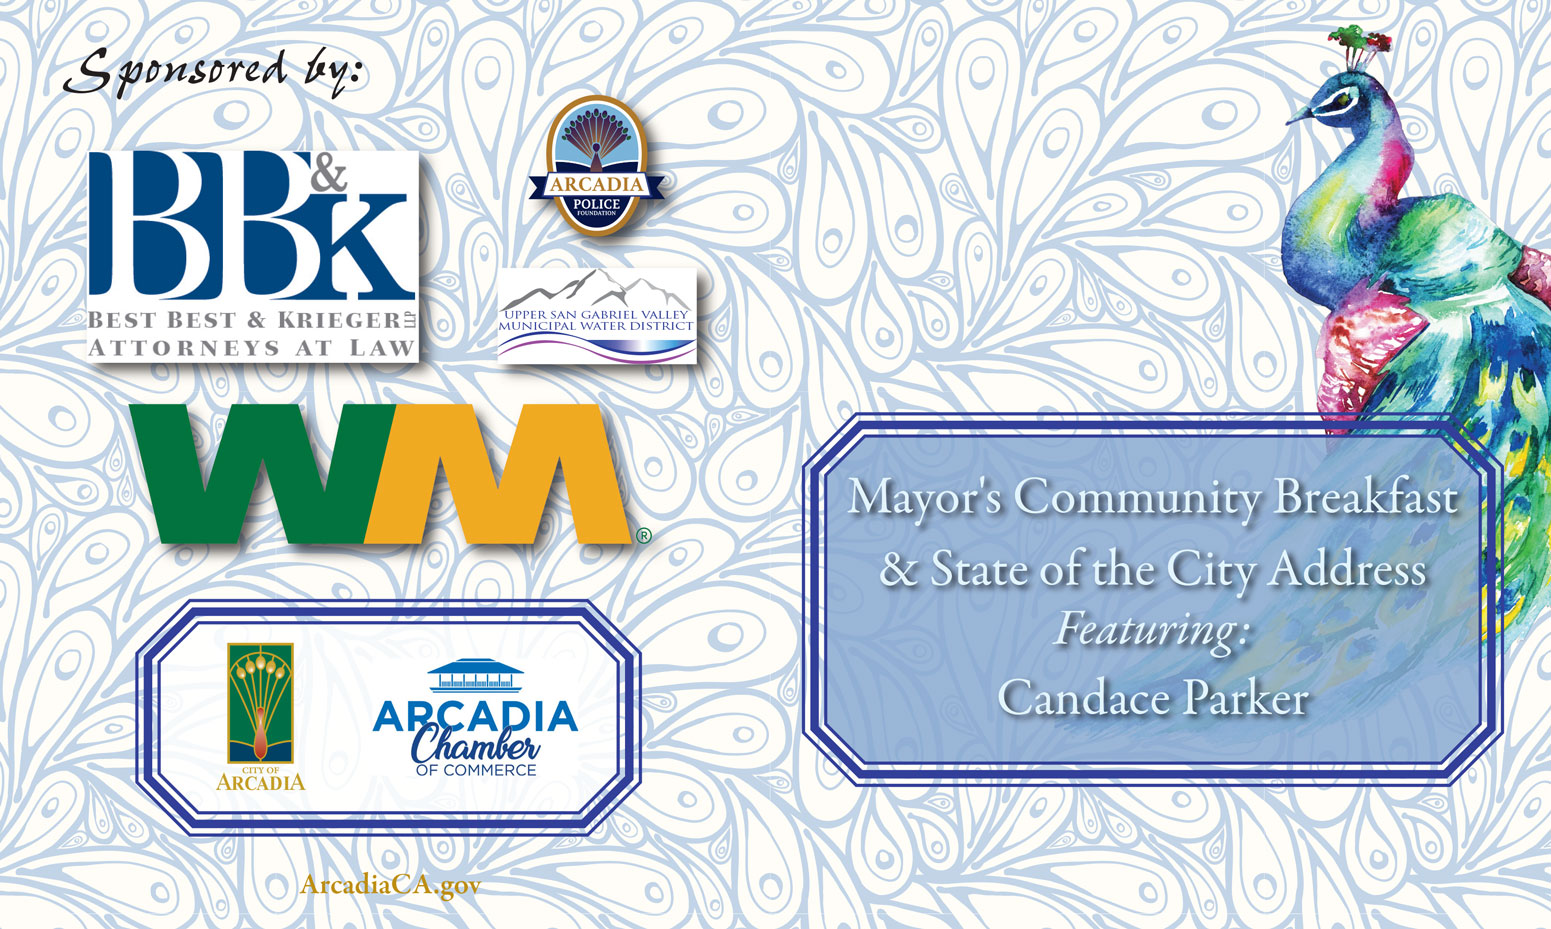 Mayor's Community Breakfast featuring Candace Parker flyer